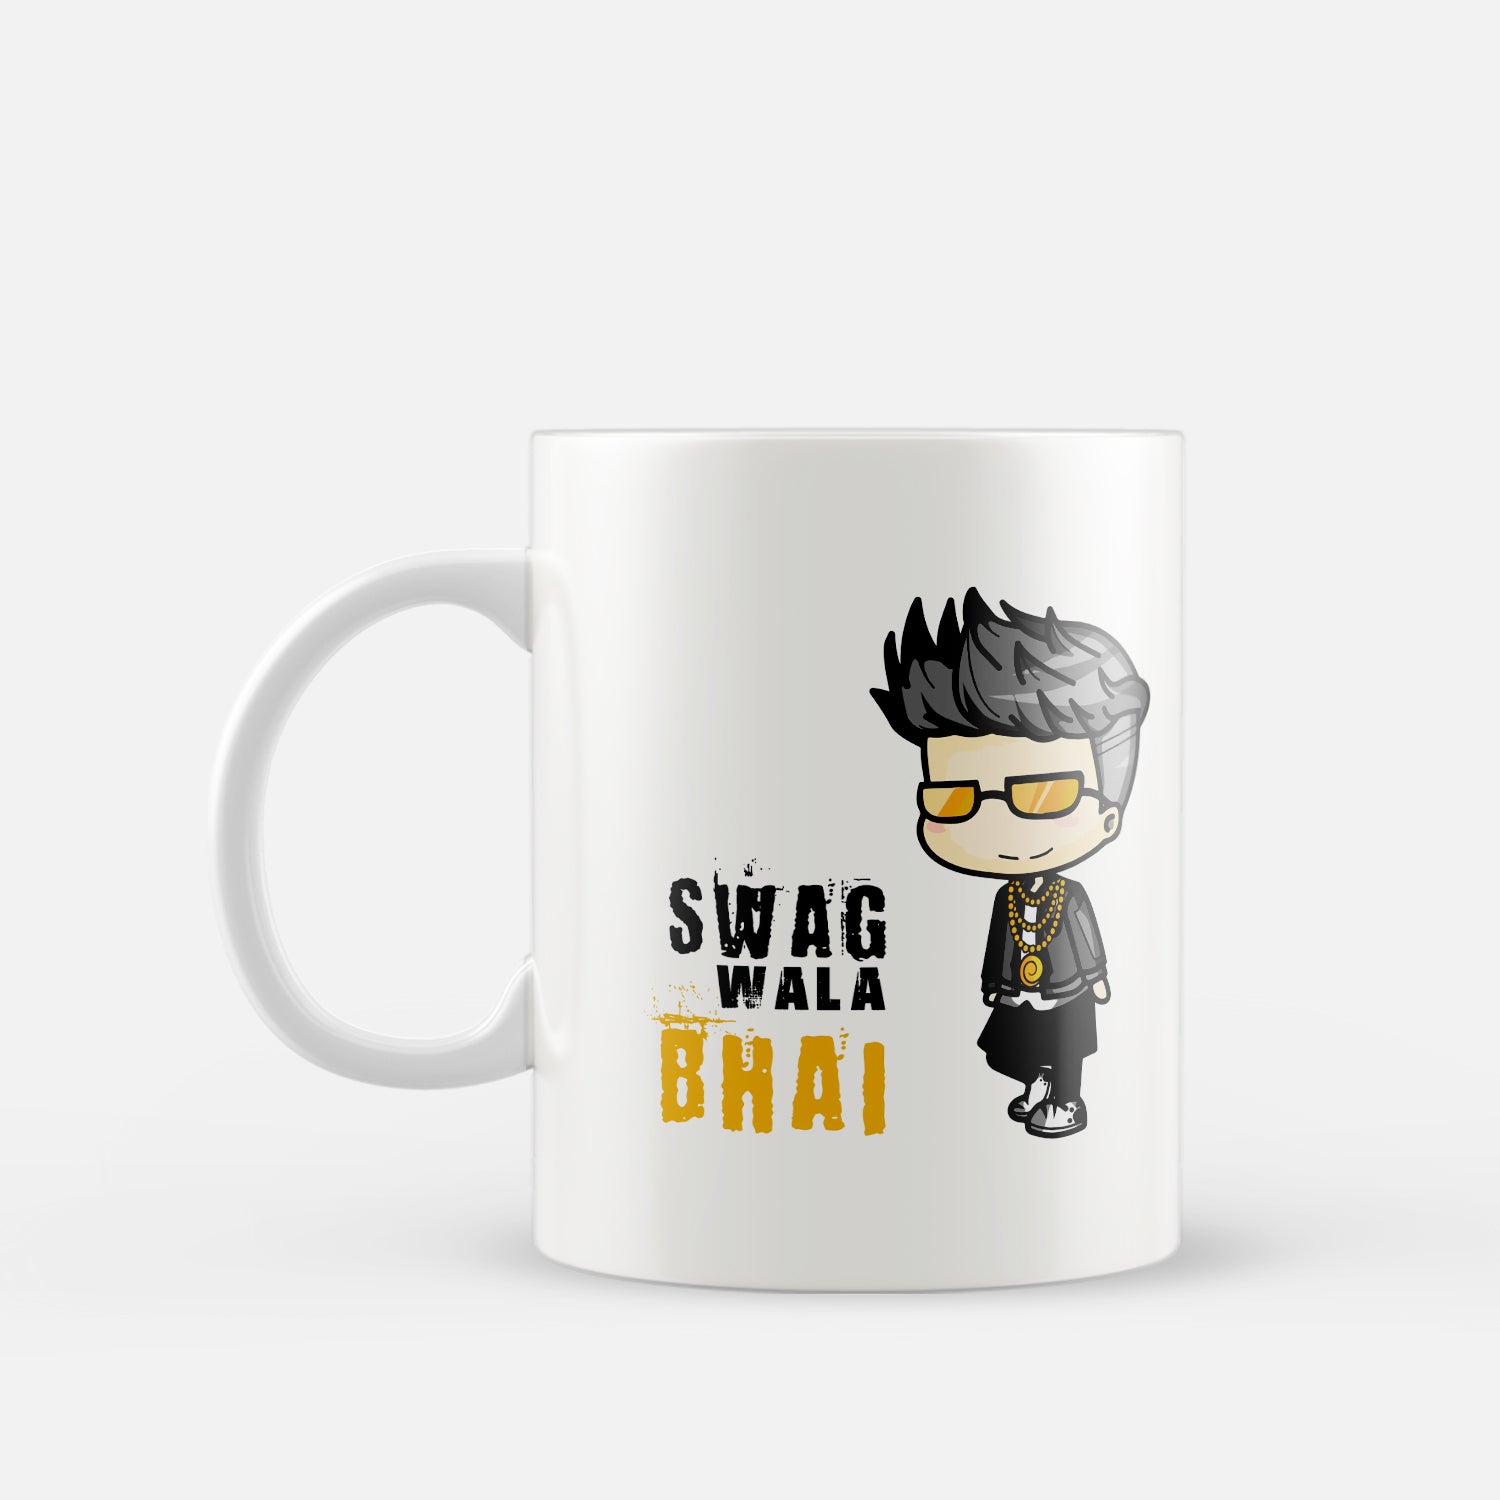 "Swag wala Bhai" Brother Ceramic Coffee/Tea Mug 2